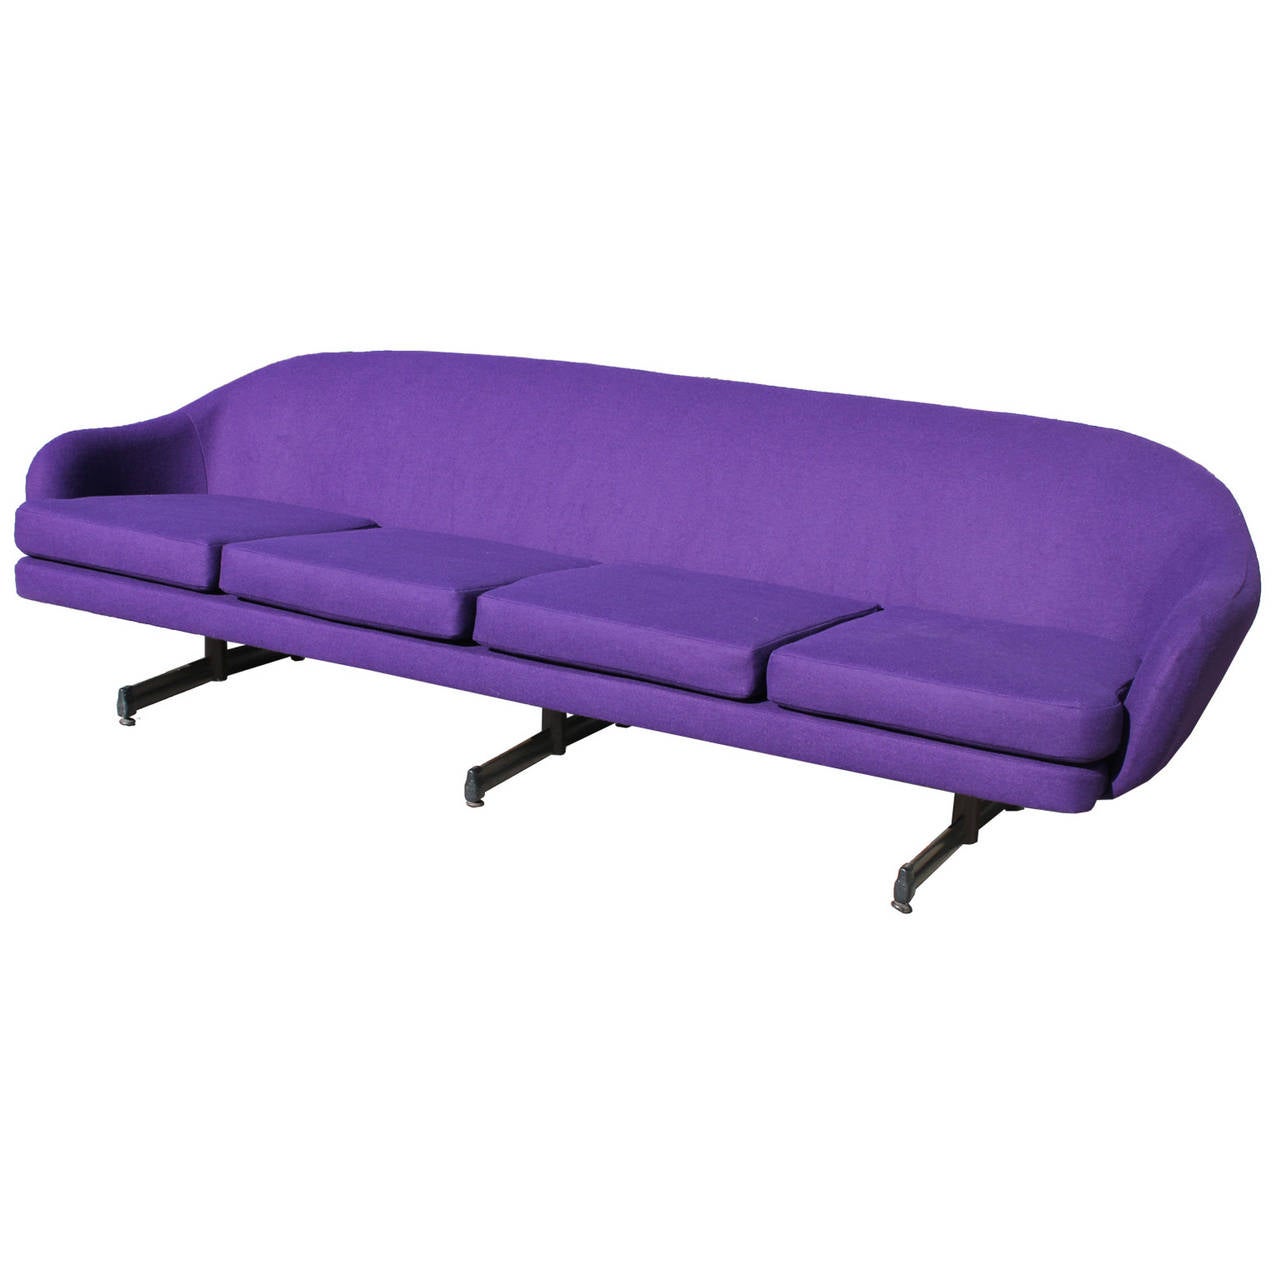 Beautiful and bold Danish sofa restored in purple divina wool.